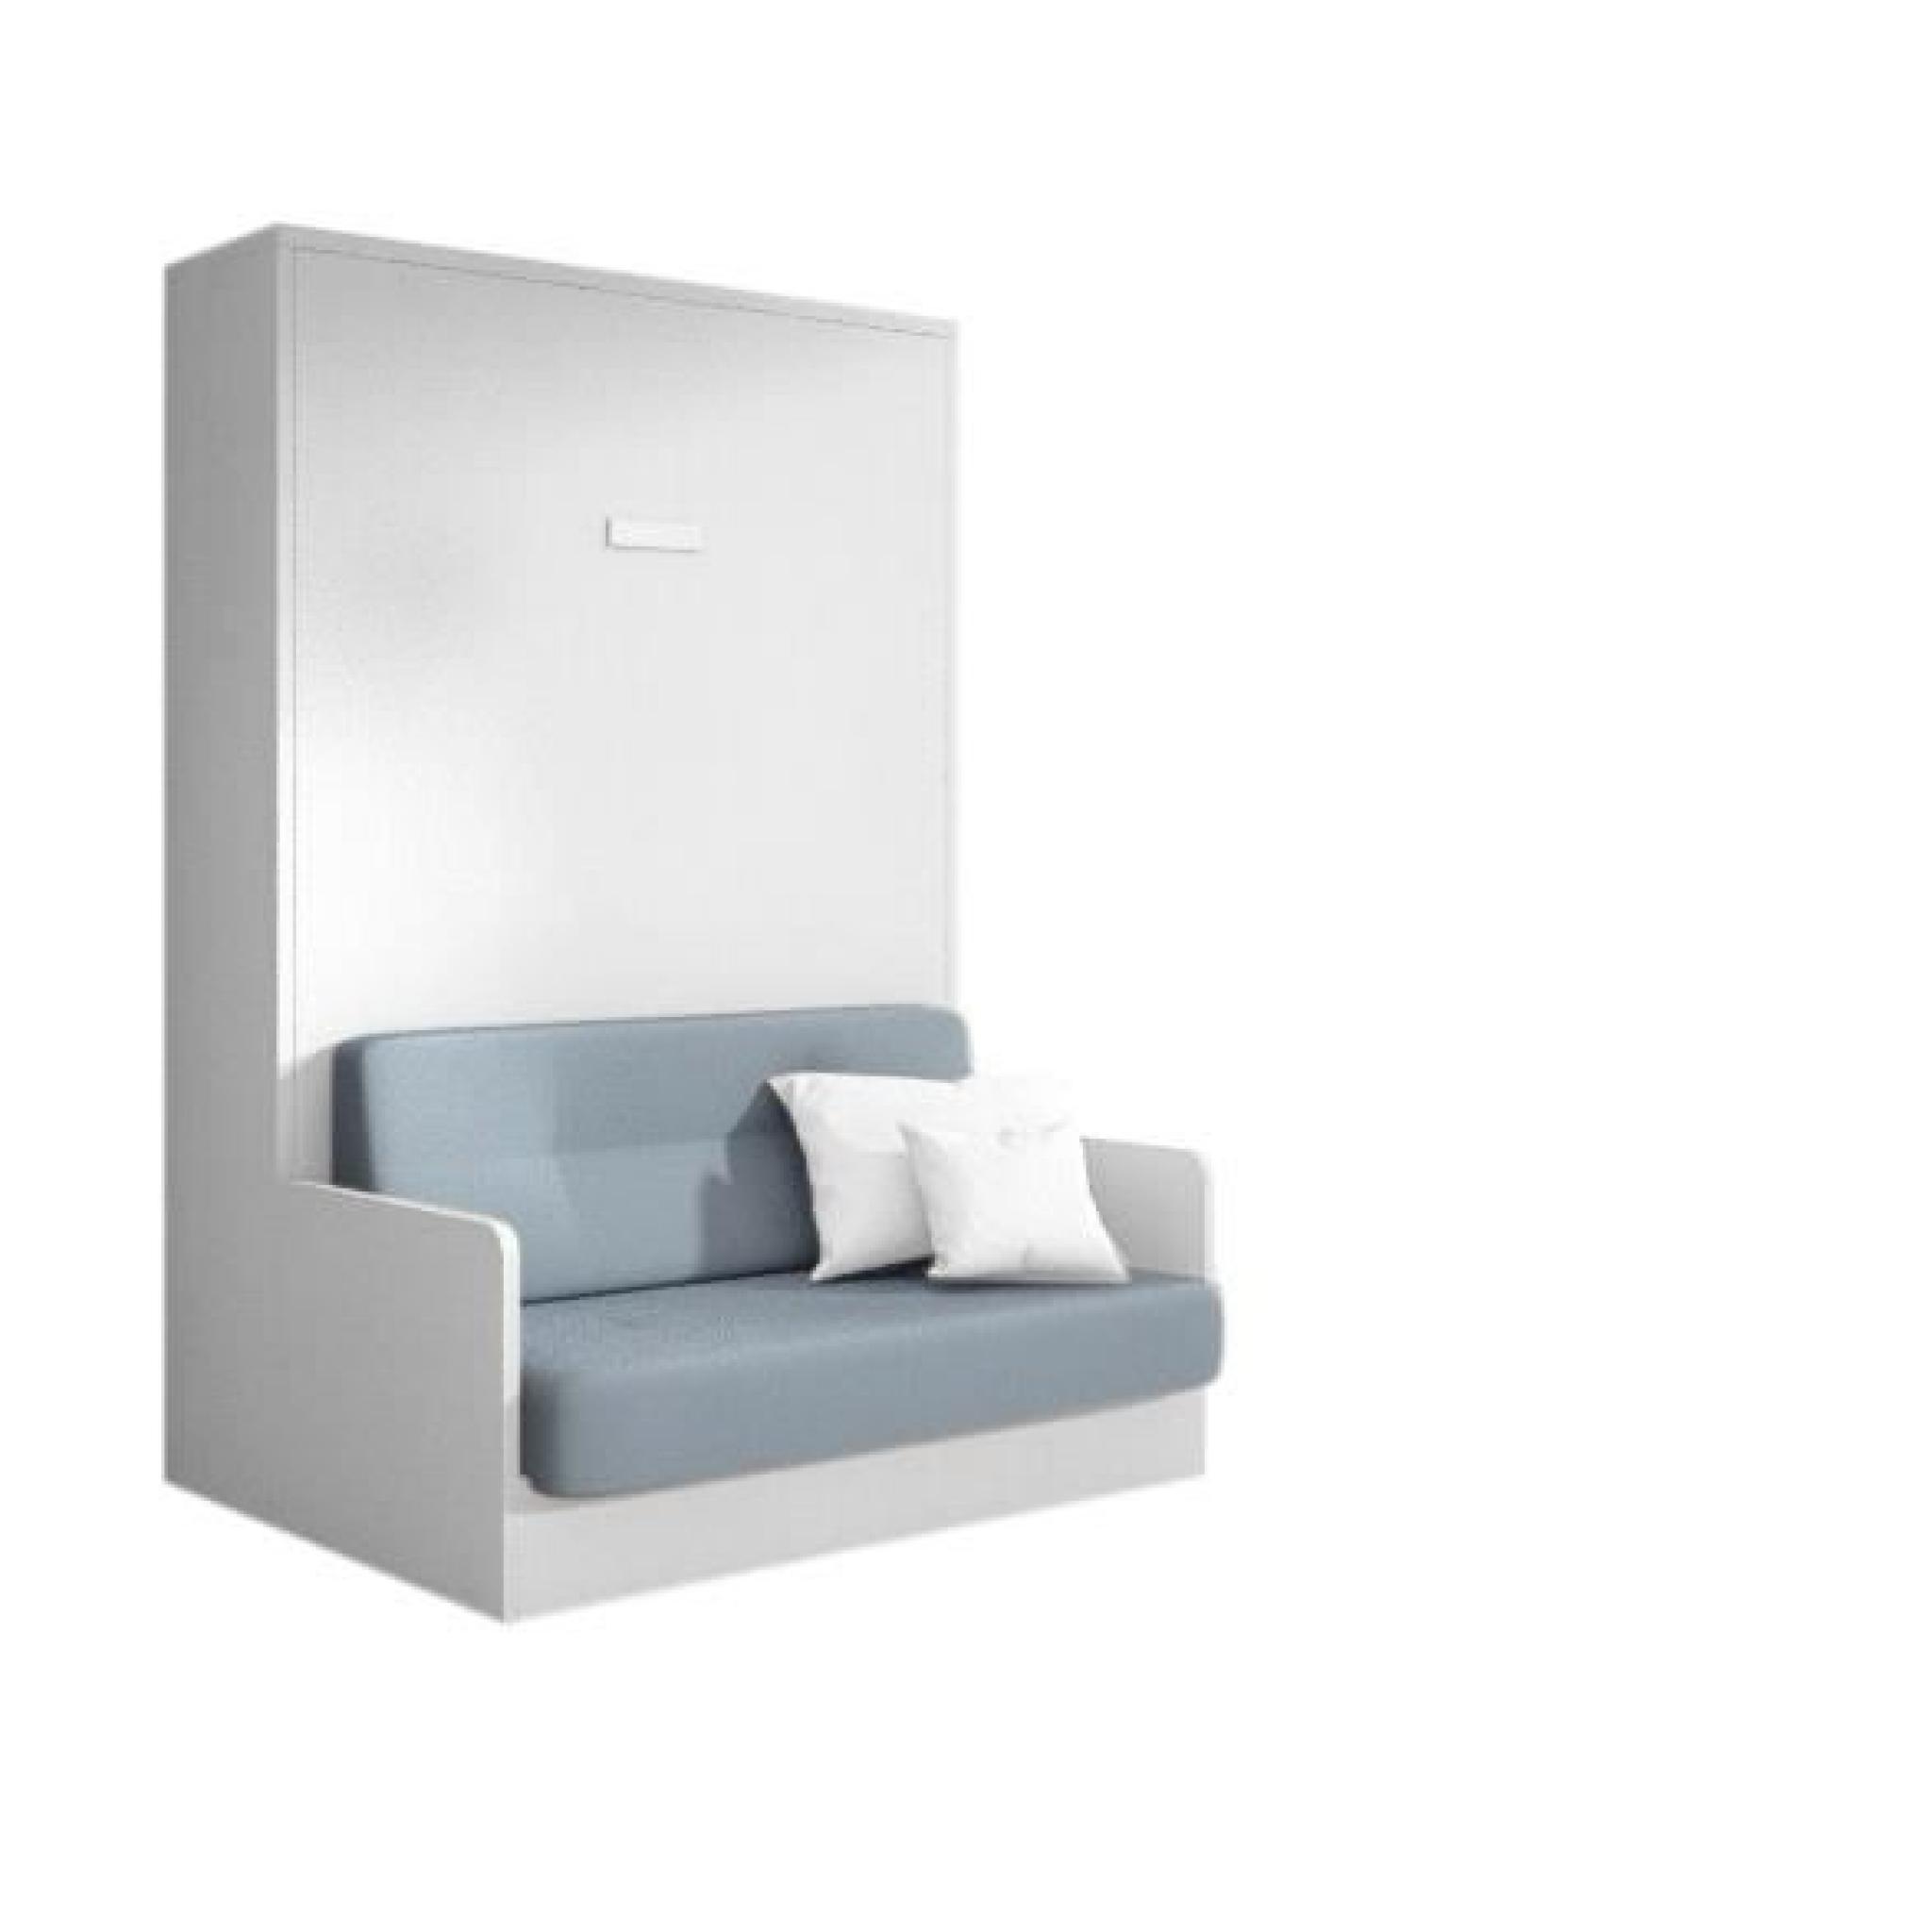 JOY - Armoire lit 140x200 chêne blanc avec canapé